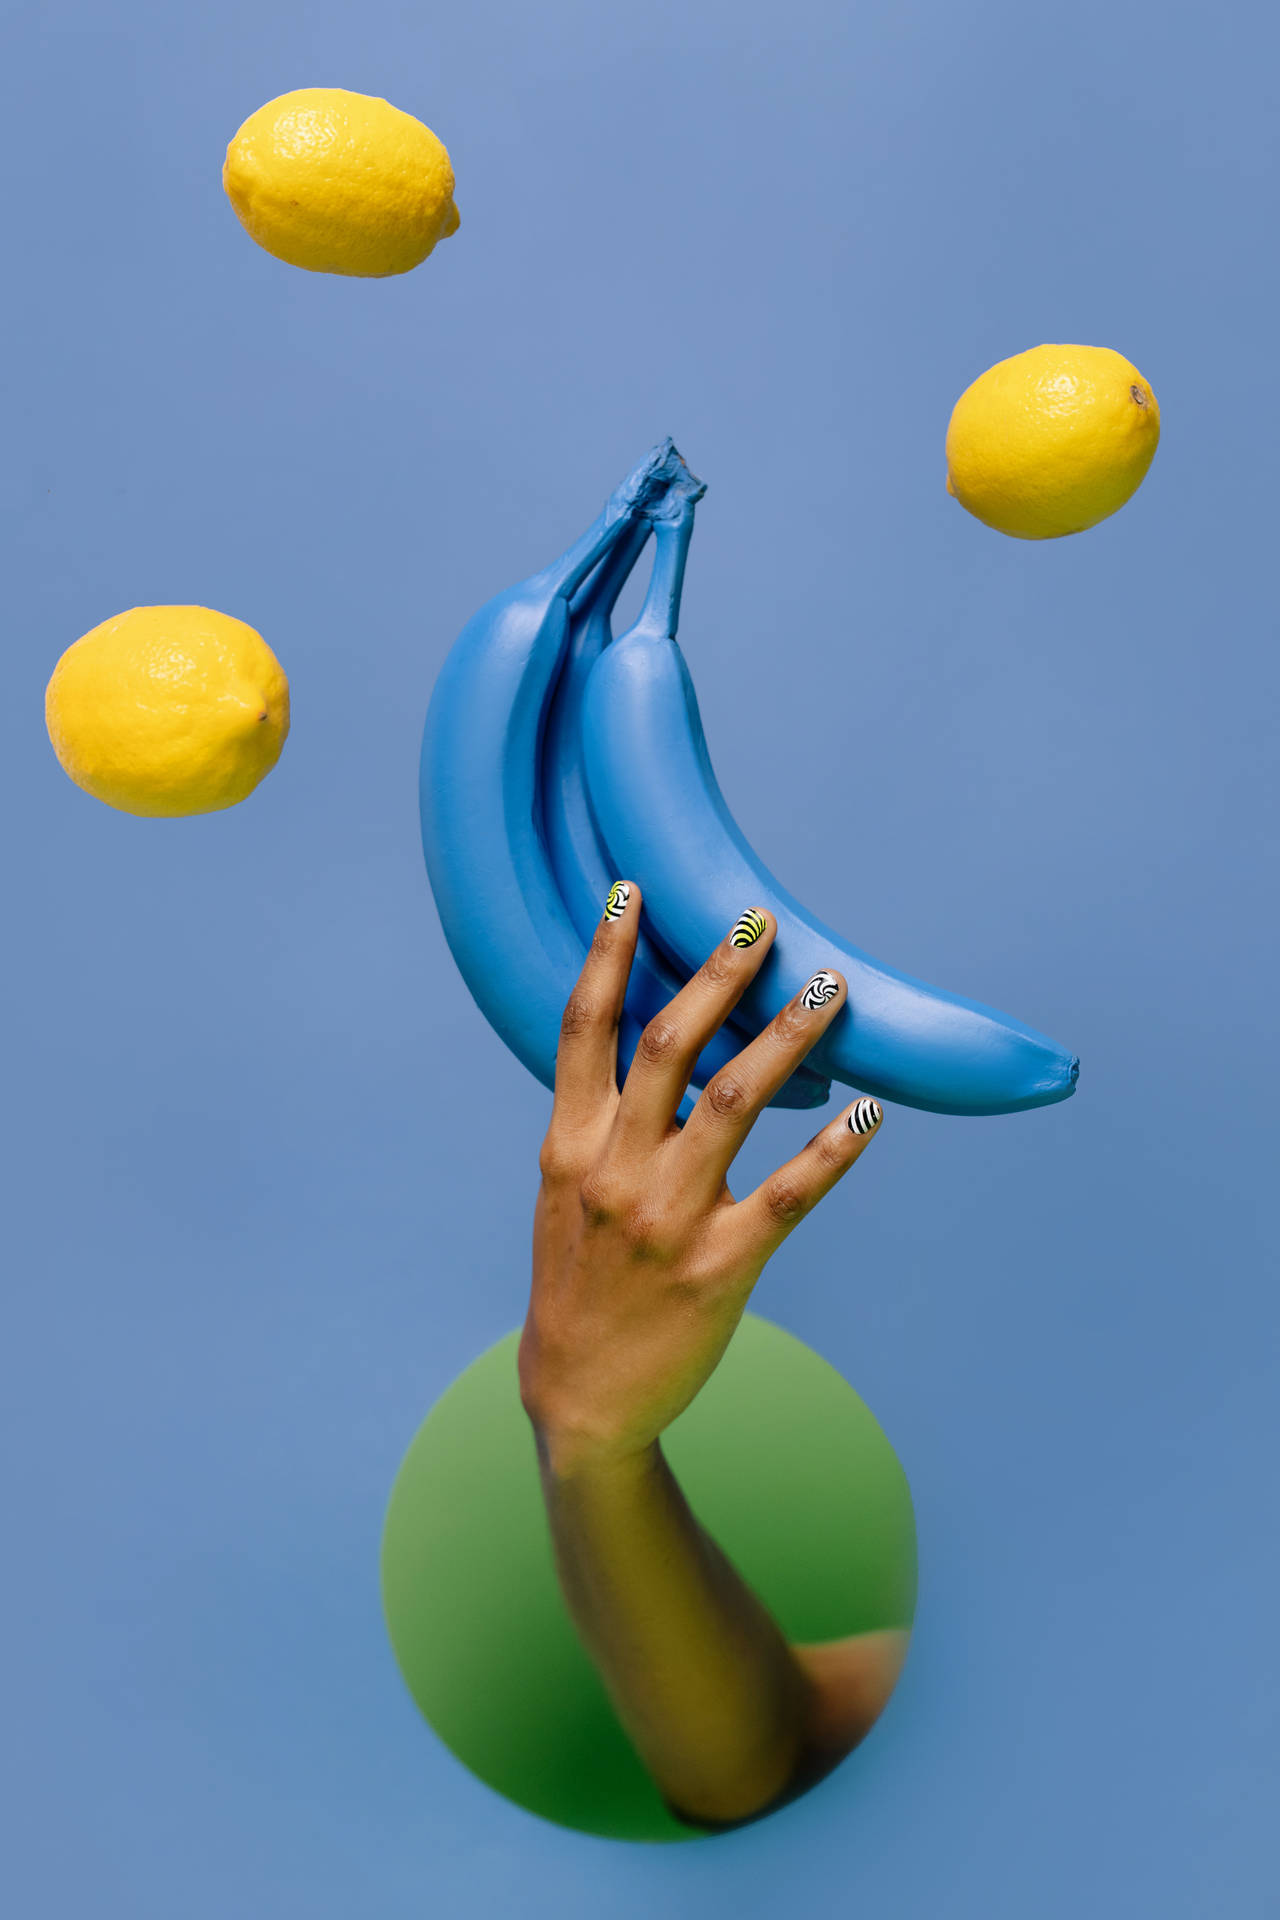 Rare Blue Bananas and Lemons Artistic Display Wallpaper